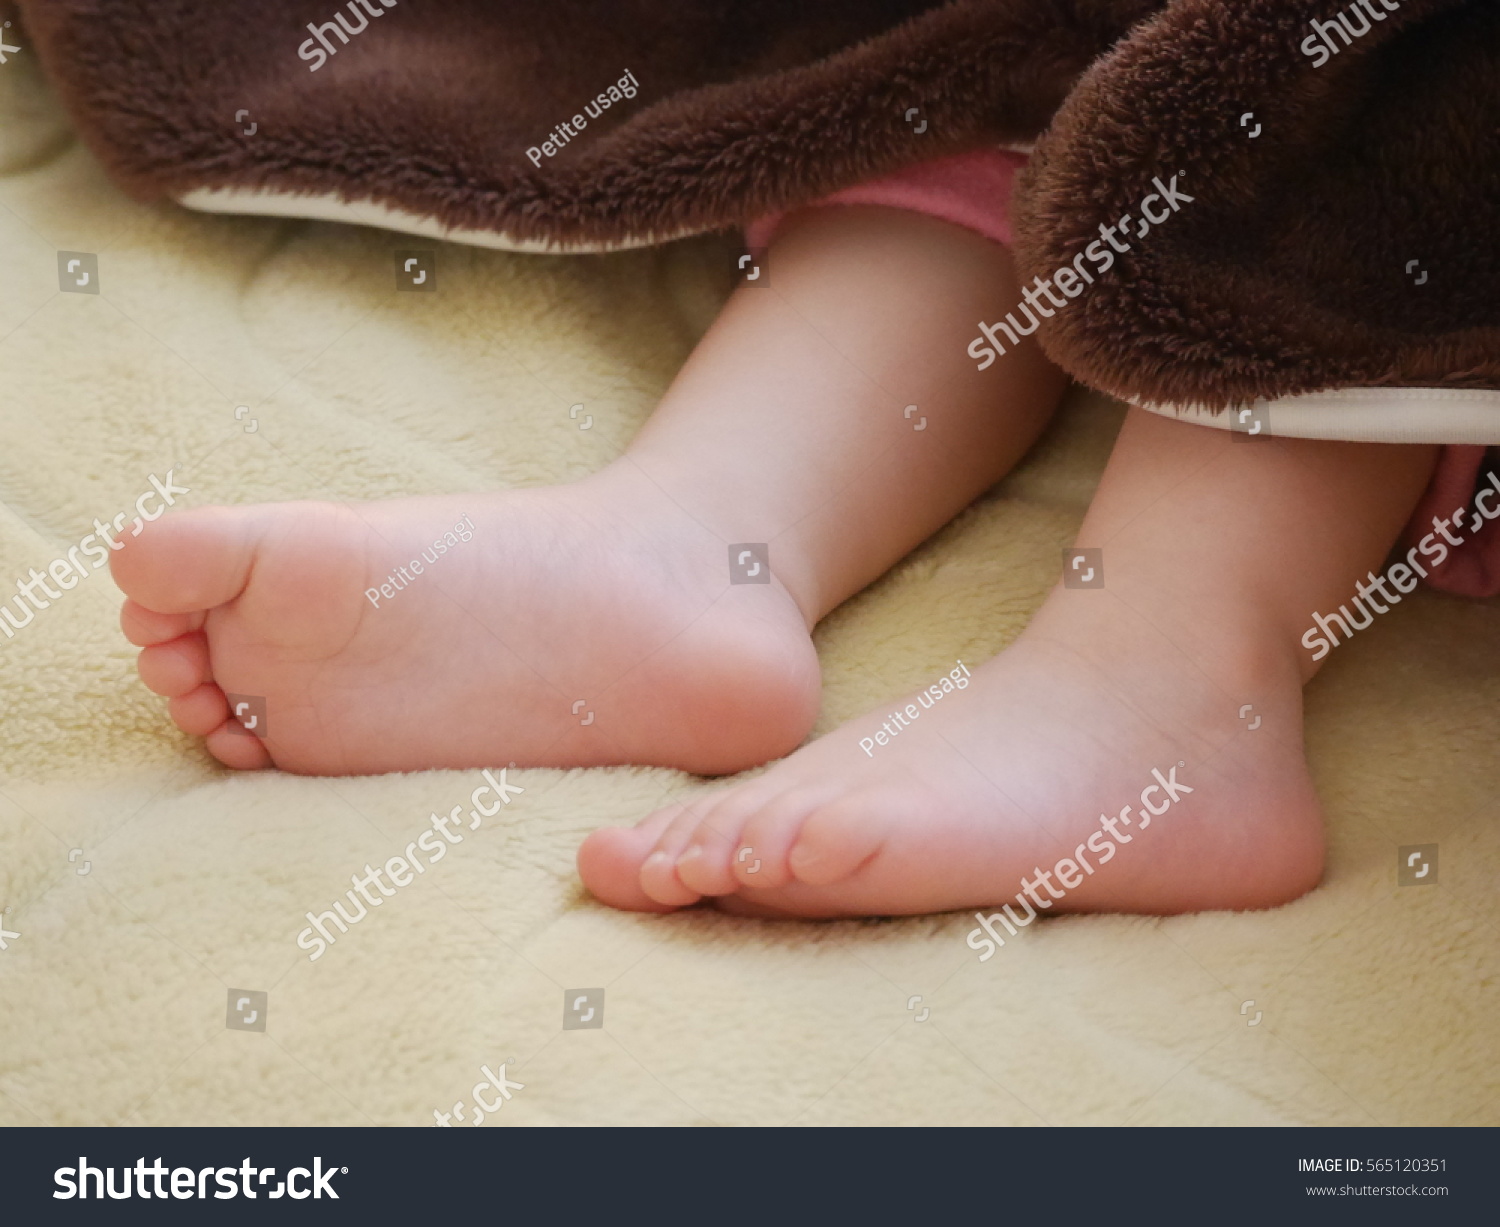 Petite feet cute Child size